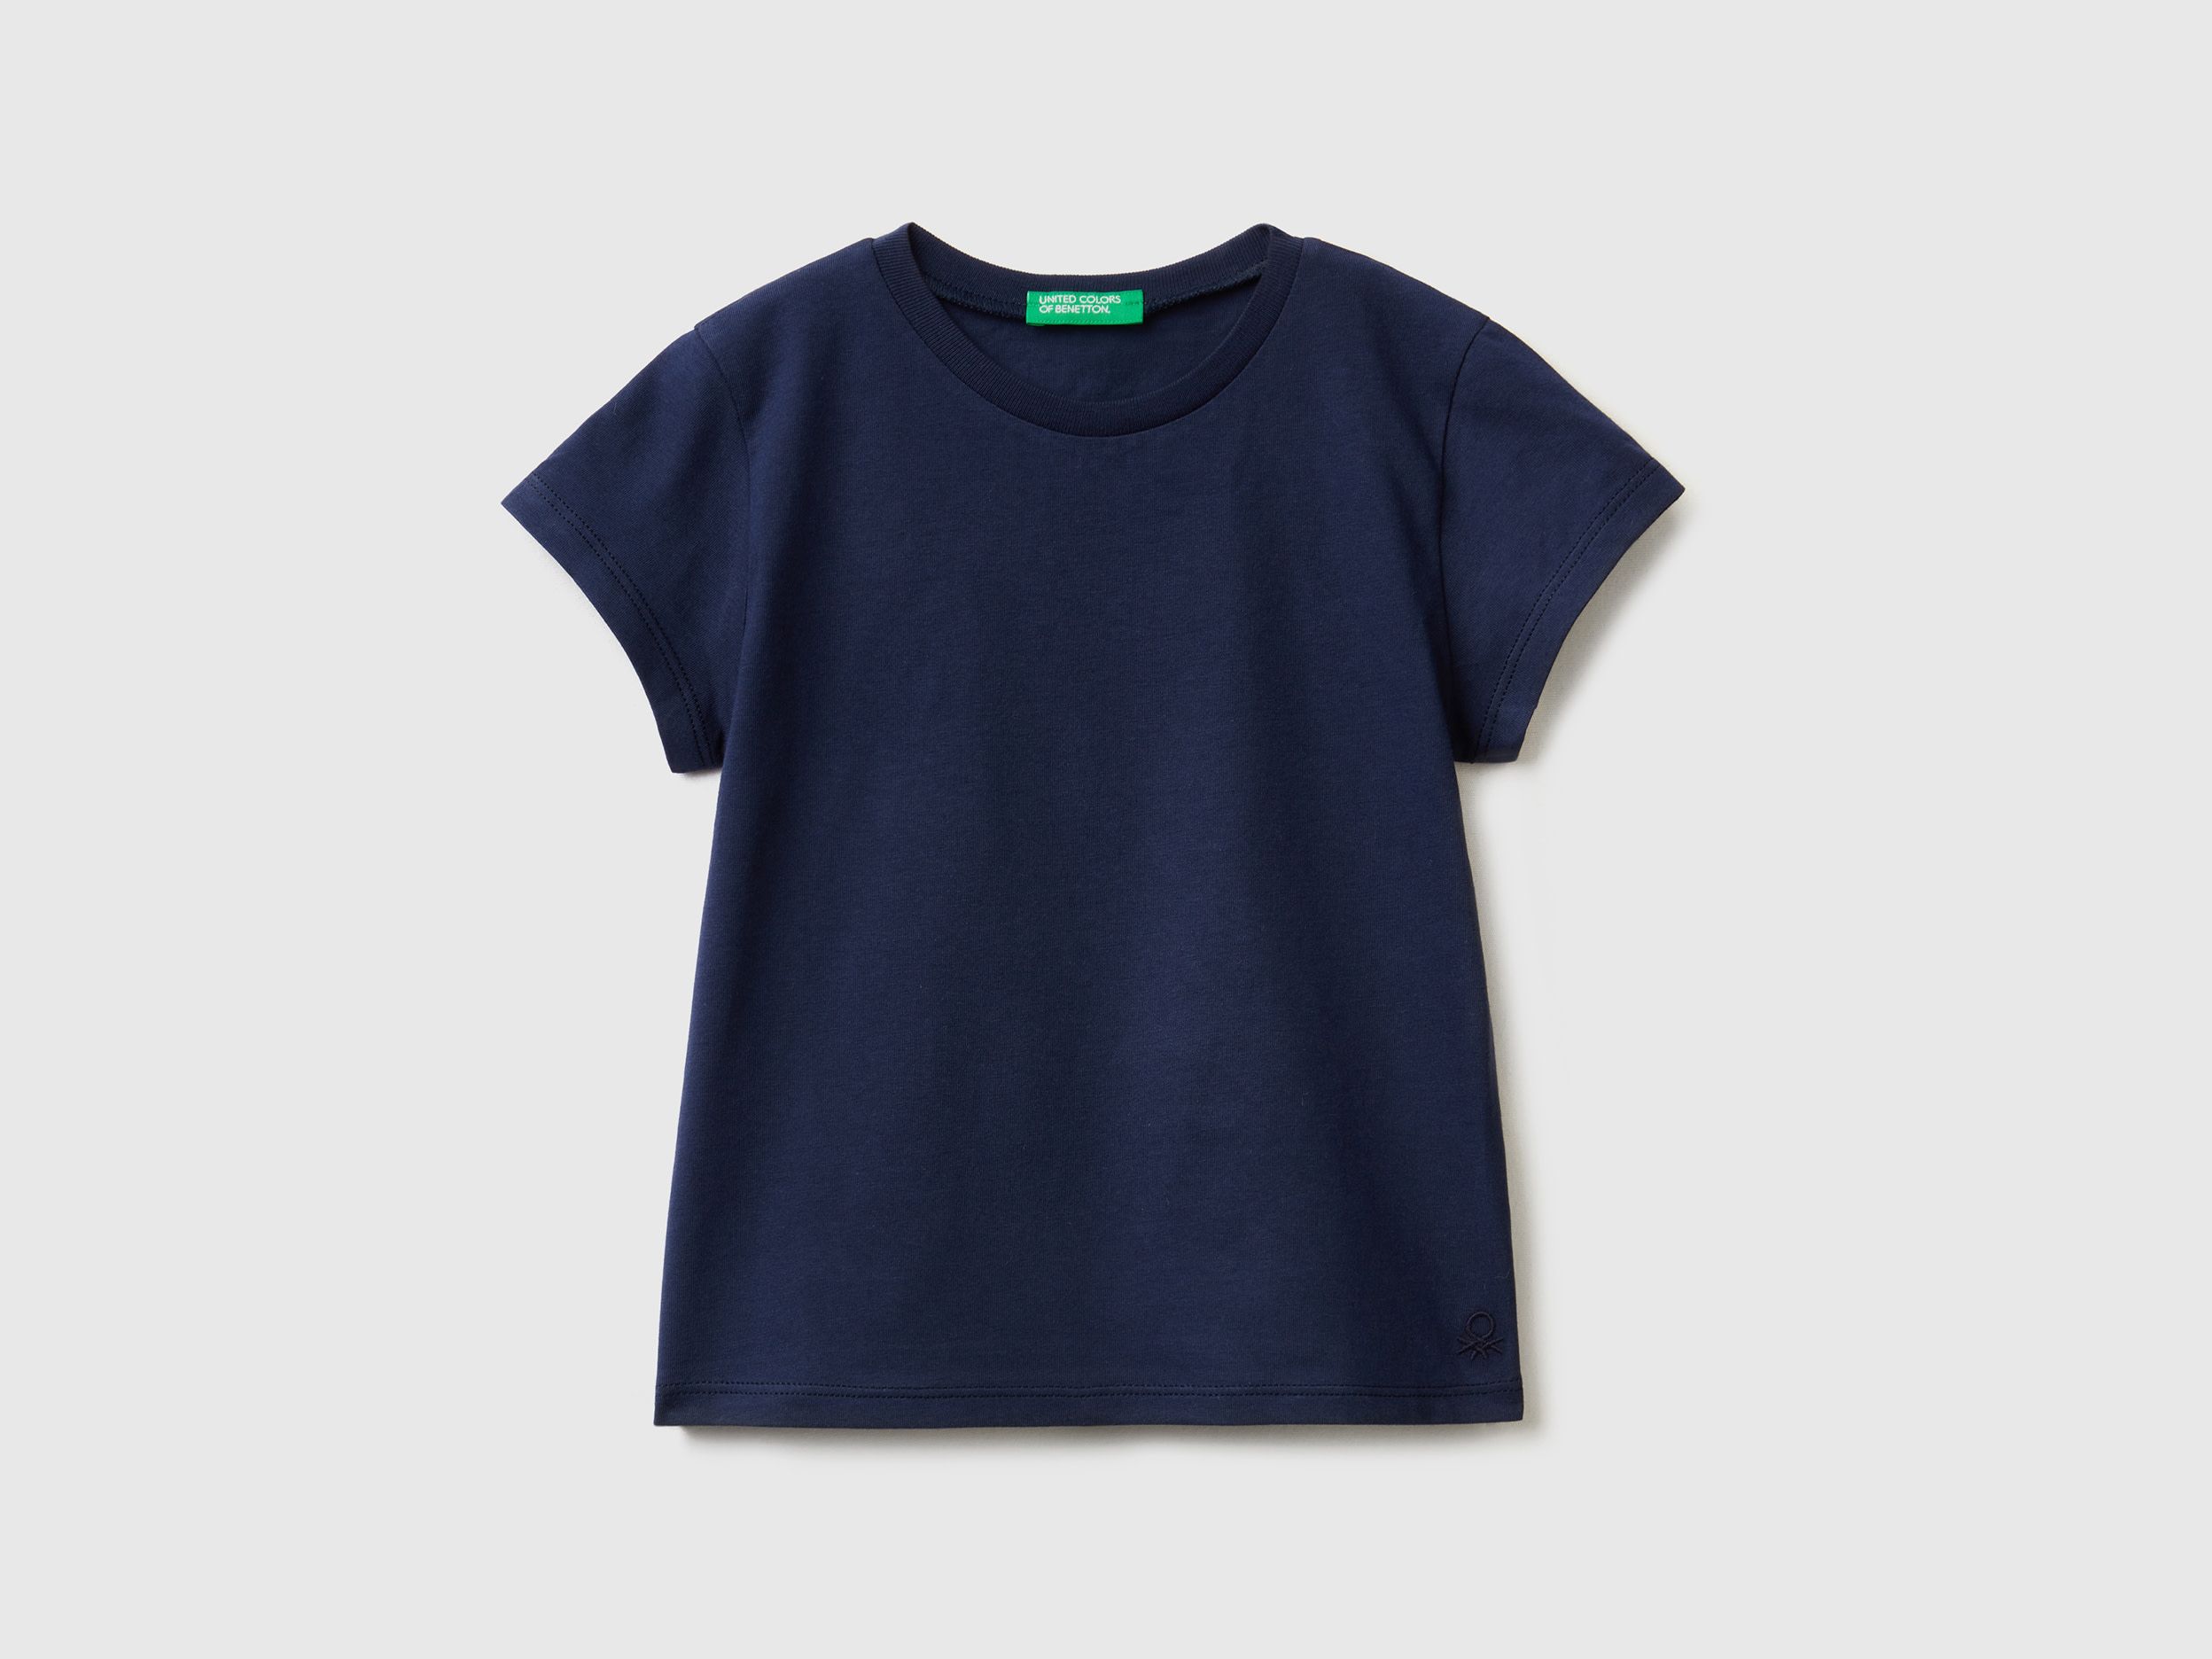 Benetton, 100% Organic Cotton T-shirt, size 5-6, Dark Blue, Kids